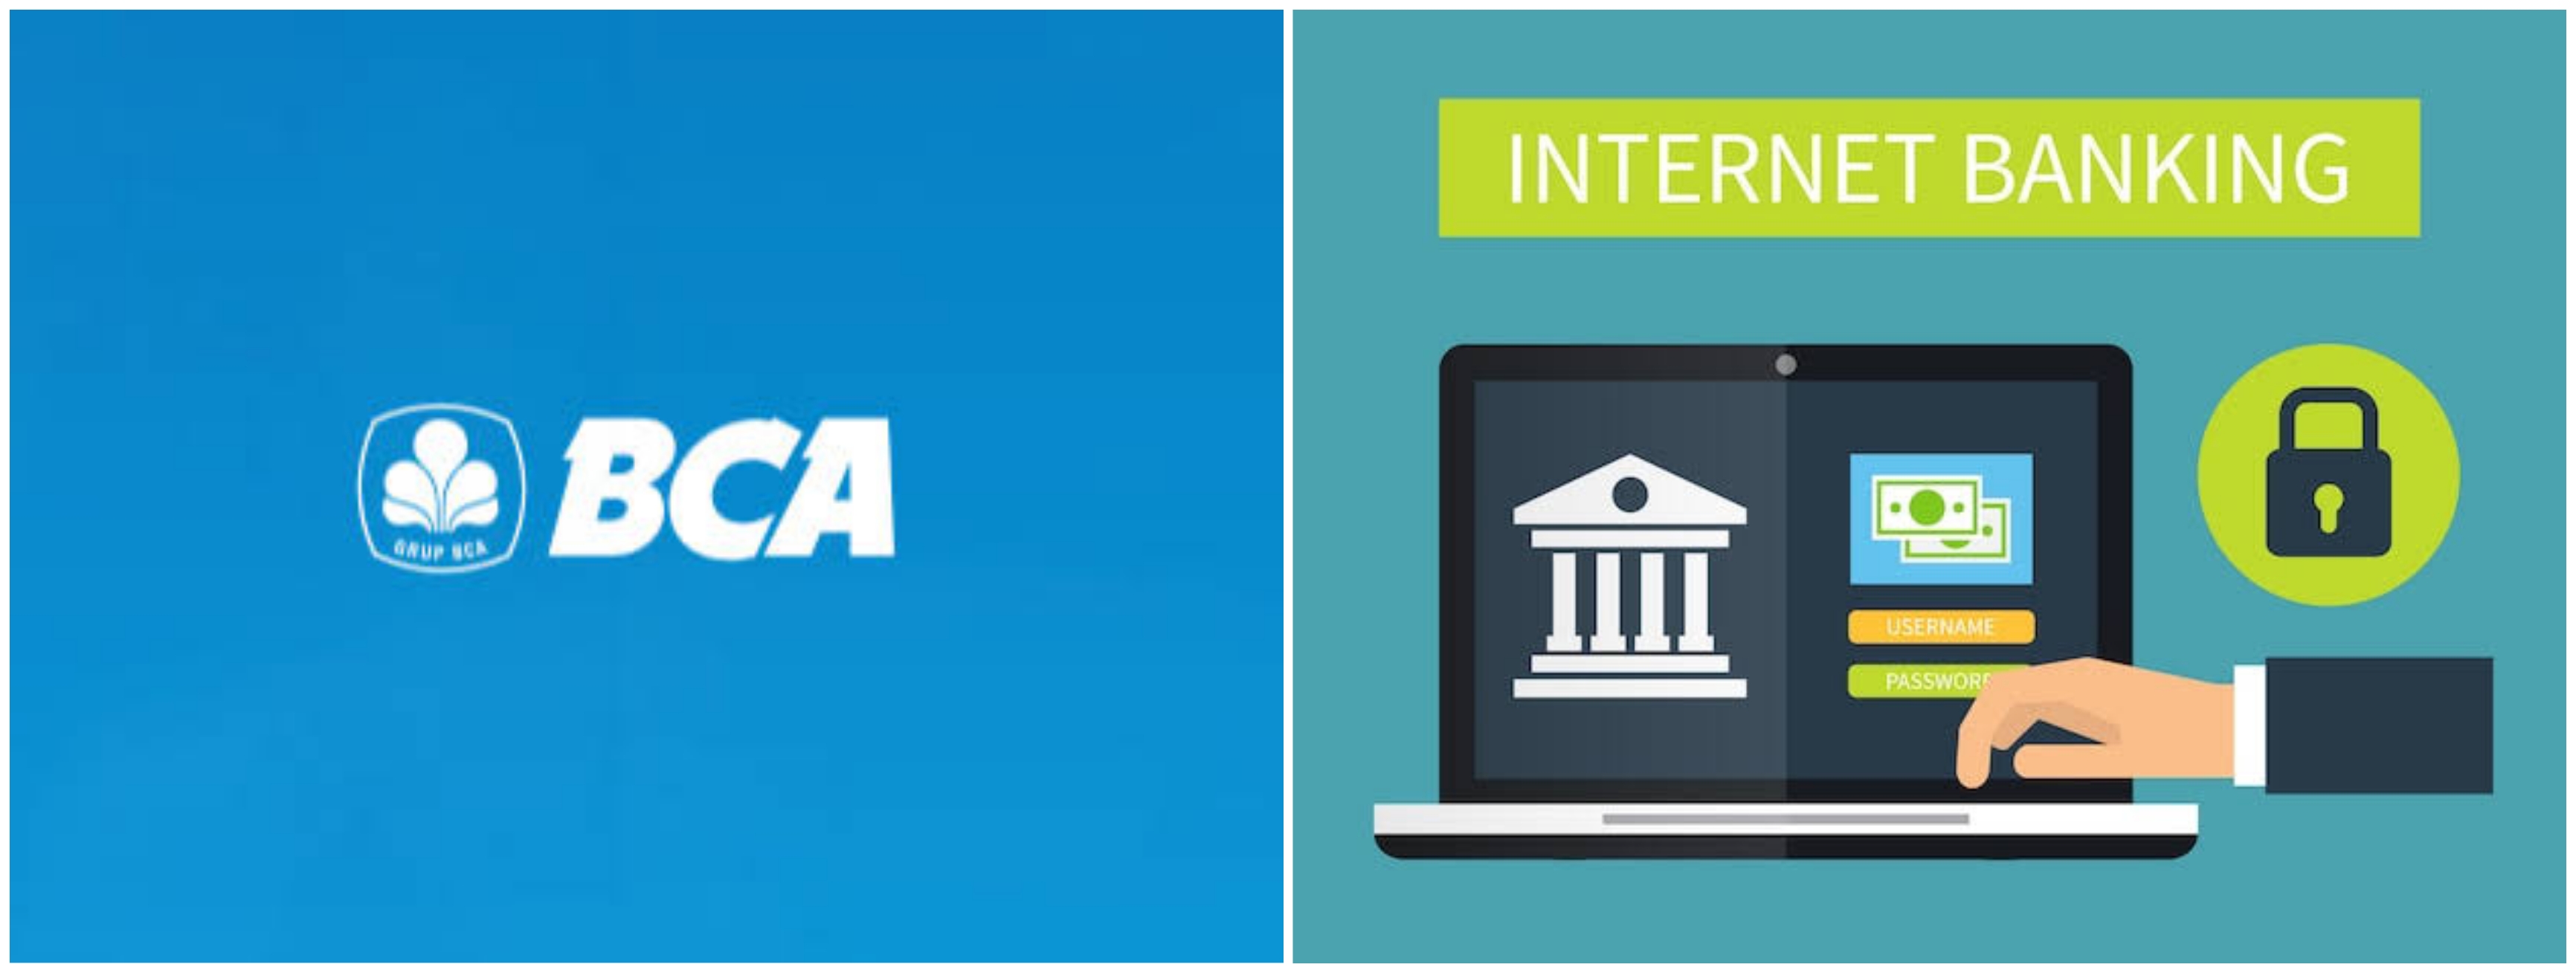 7 Cara mengaktifkan Internet Banking BCA, tanpa datang ke bank